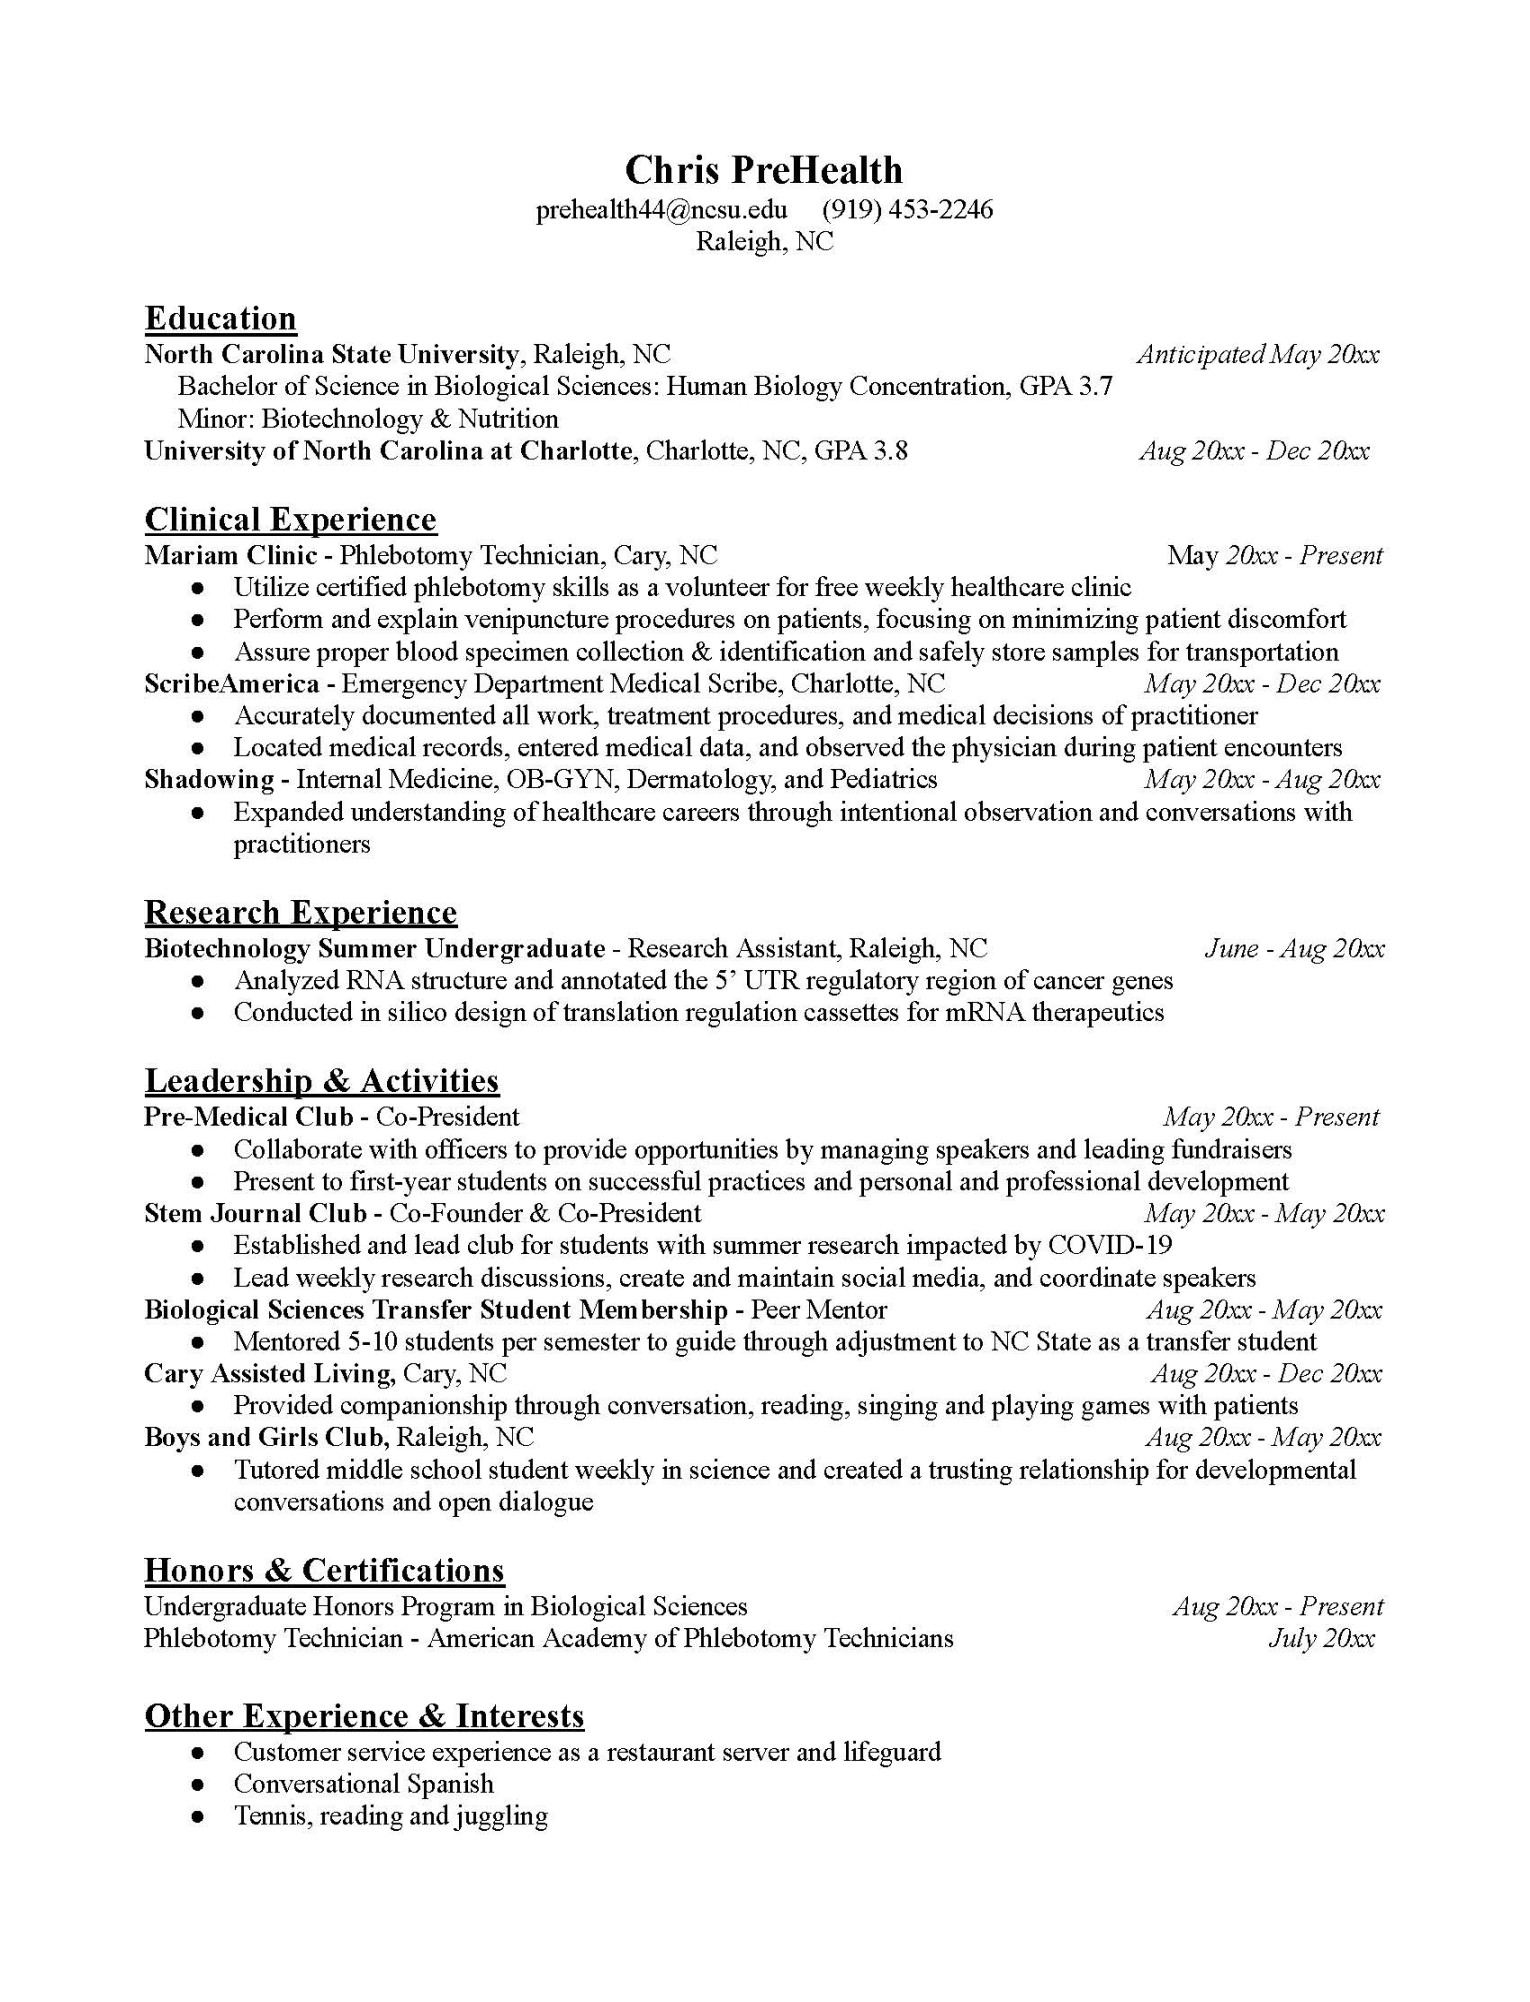 Resume and CV Examples  Career Development Center